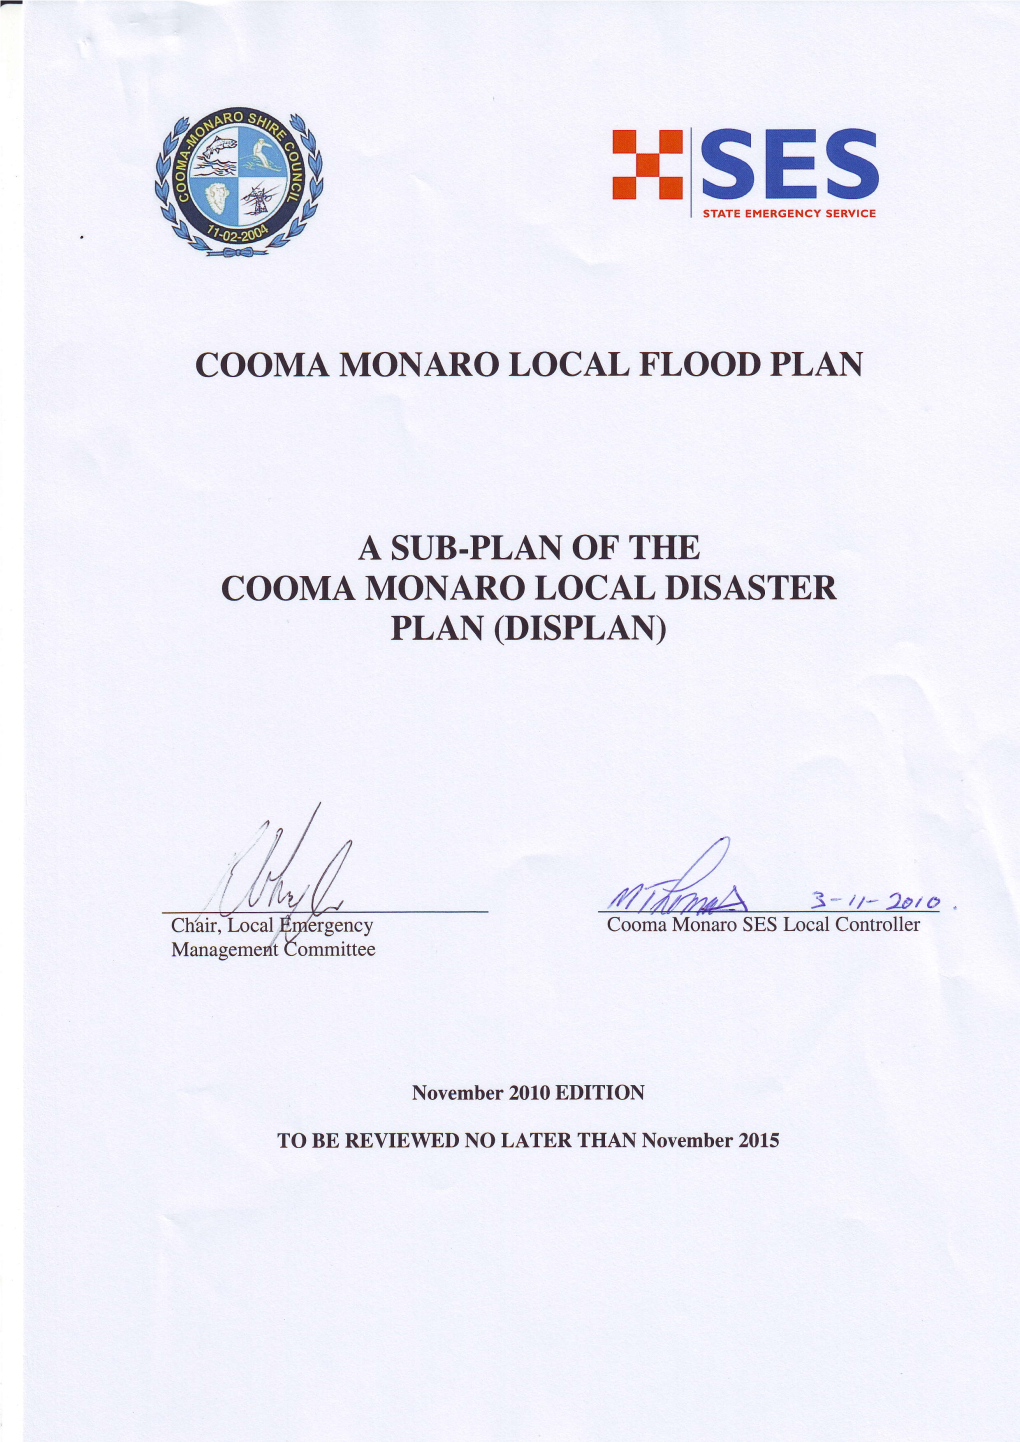 A Sub-Plan of the Cooma Monaro Local